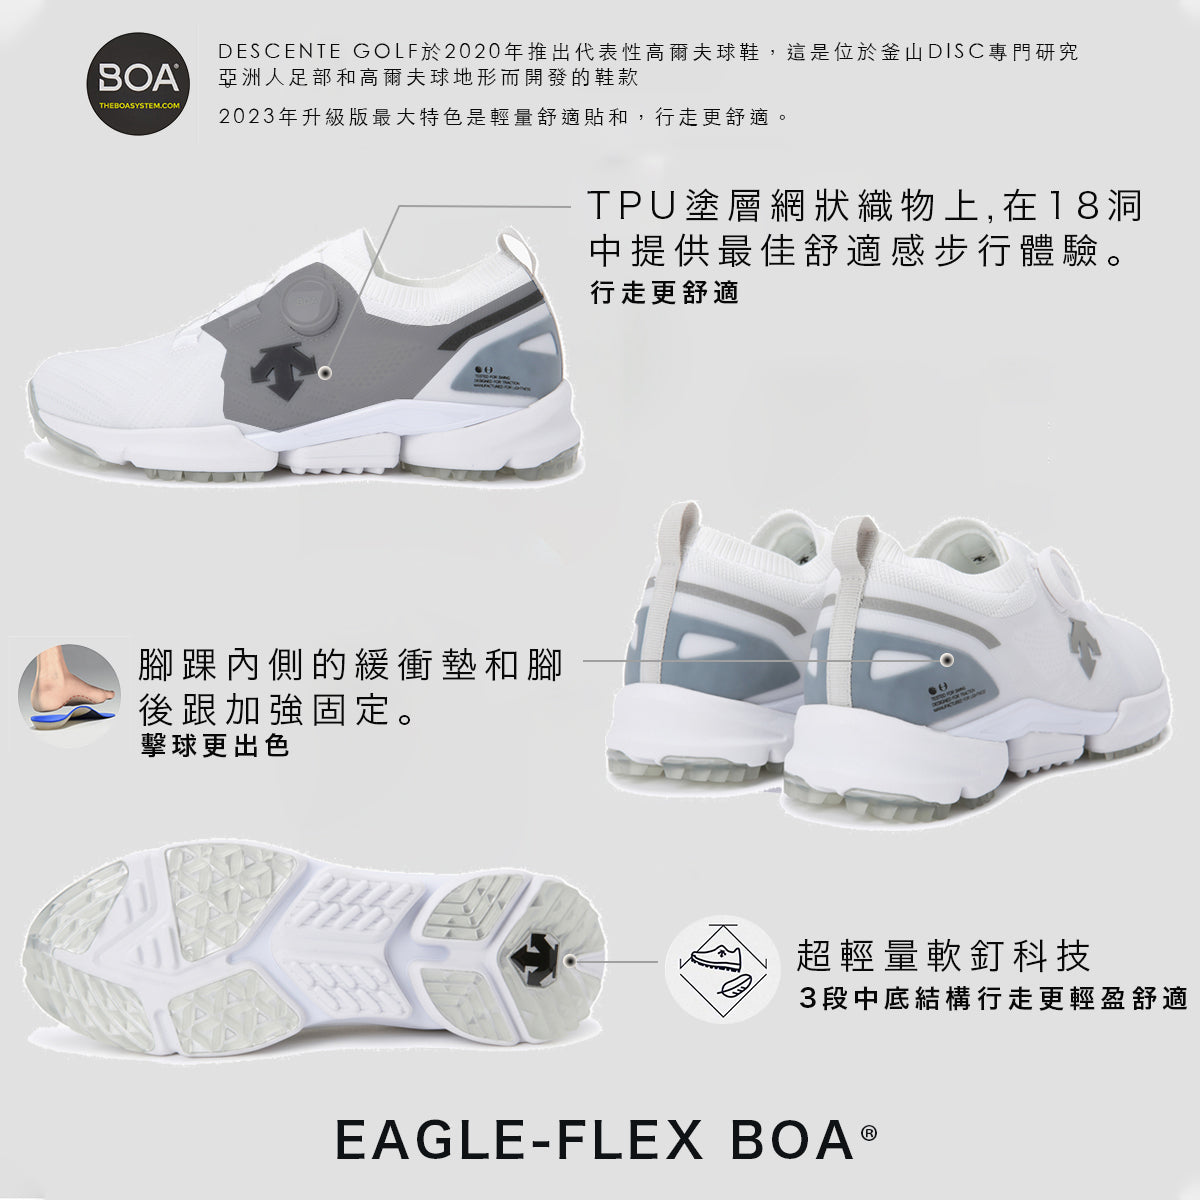 EAGLE-FLEX BOA 男士 高爾夫無釘球鞋《贈鞋套袋乙個》